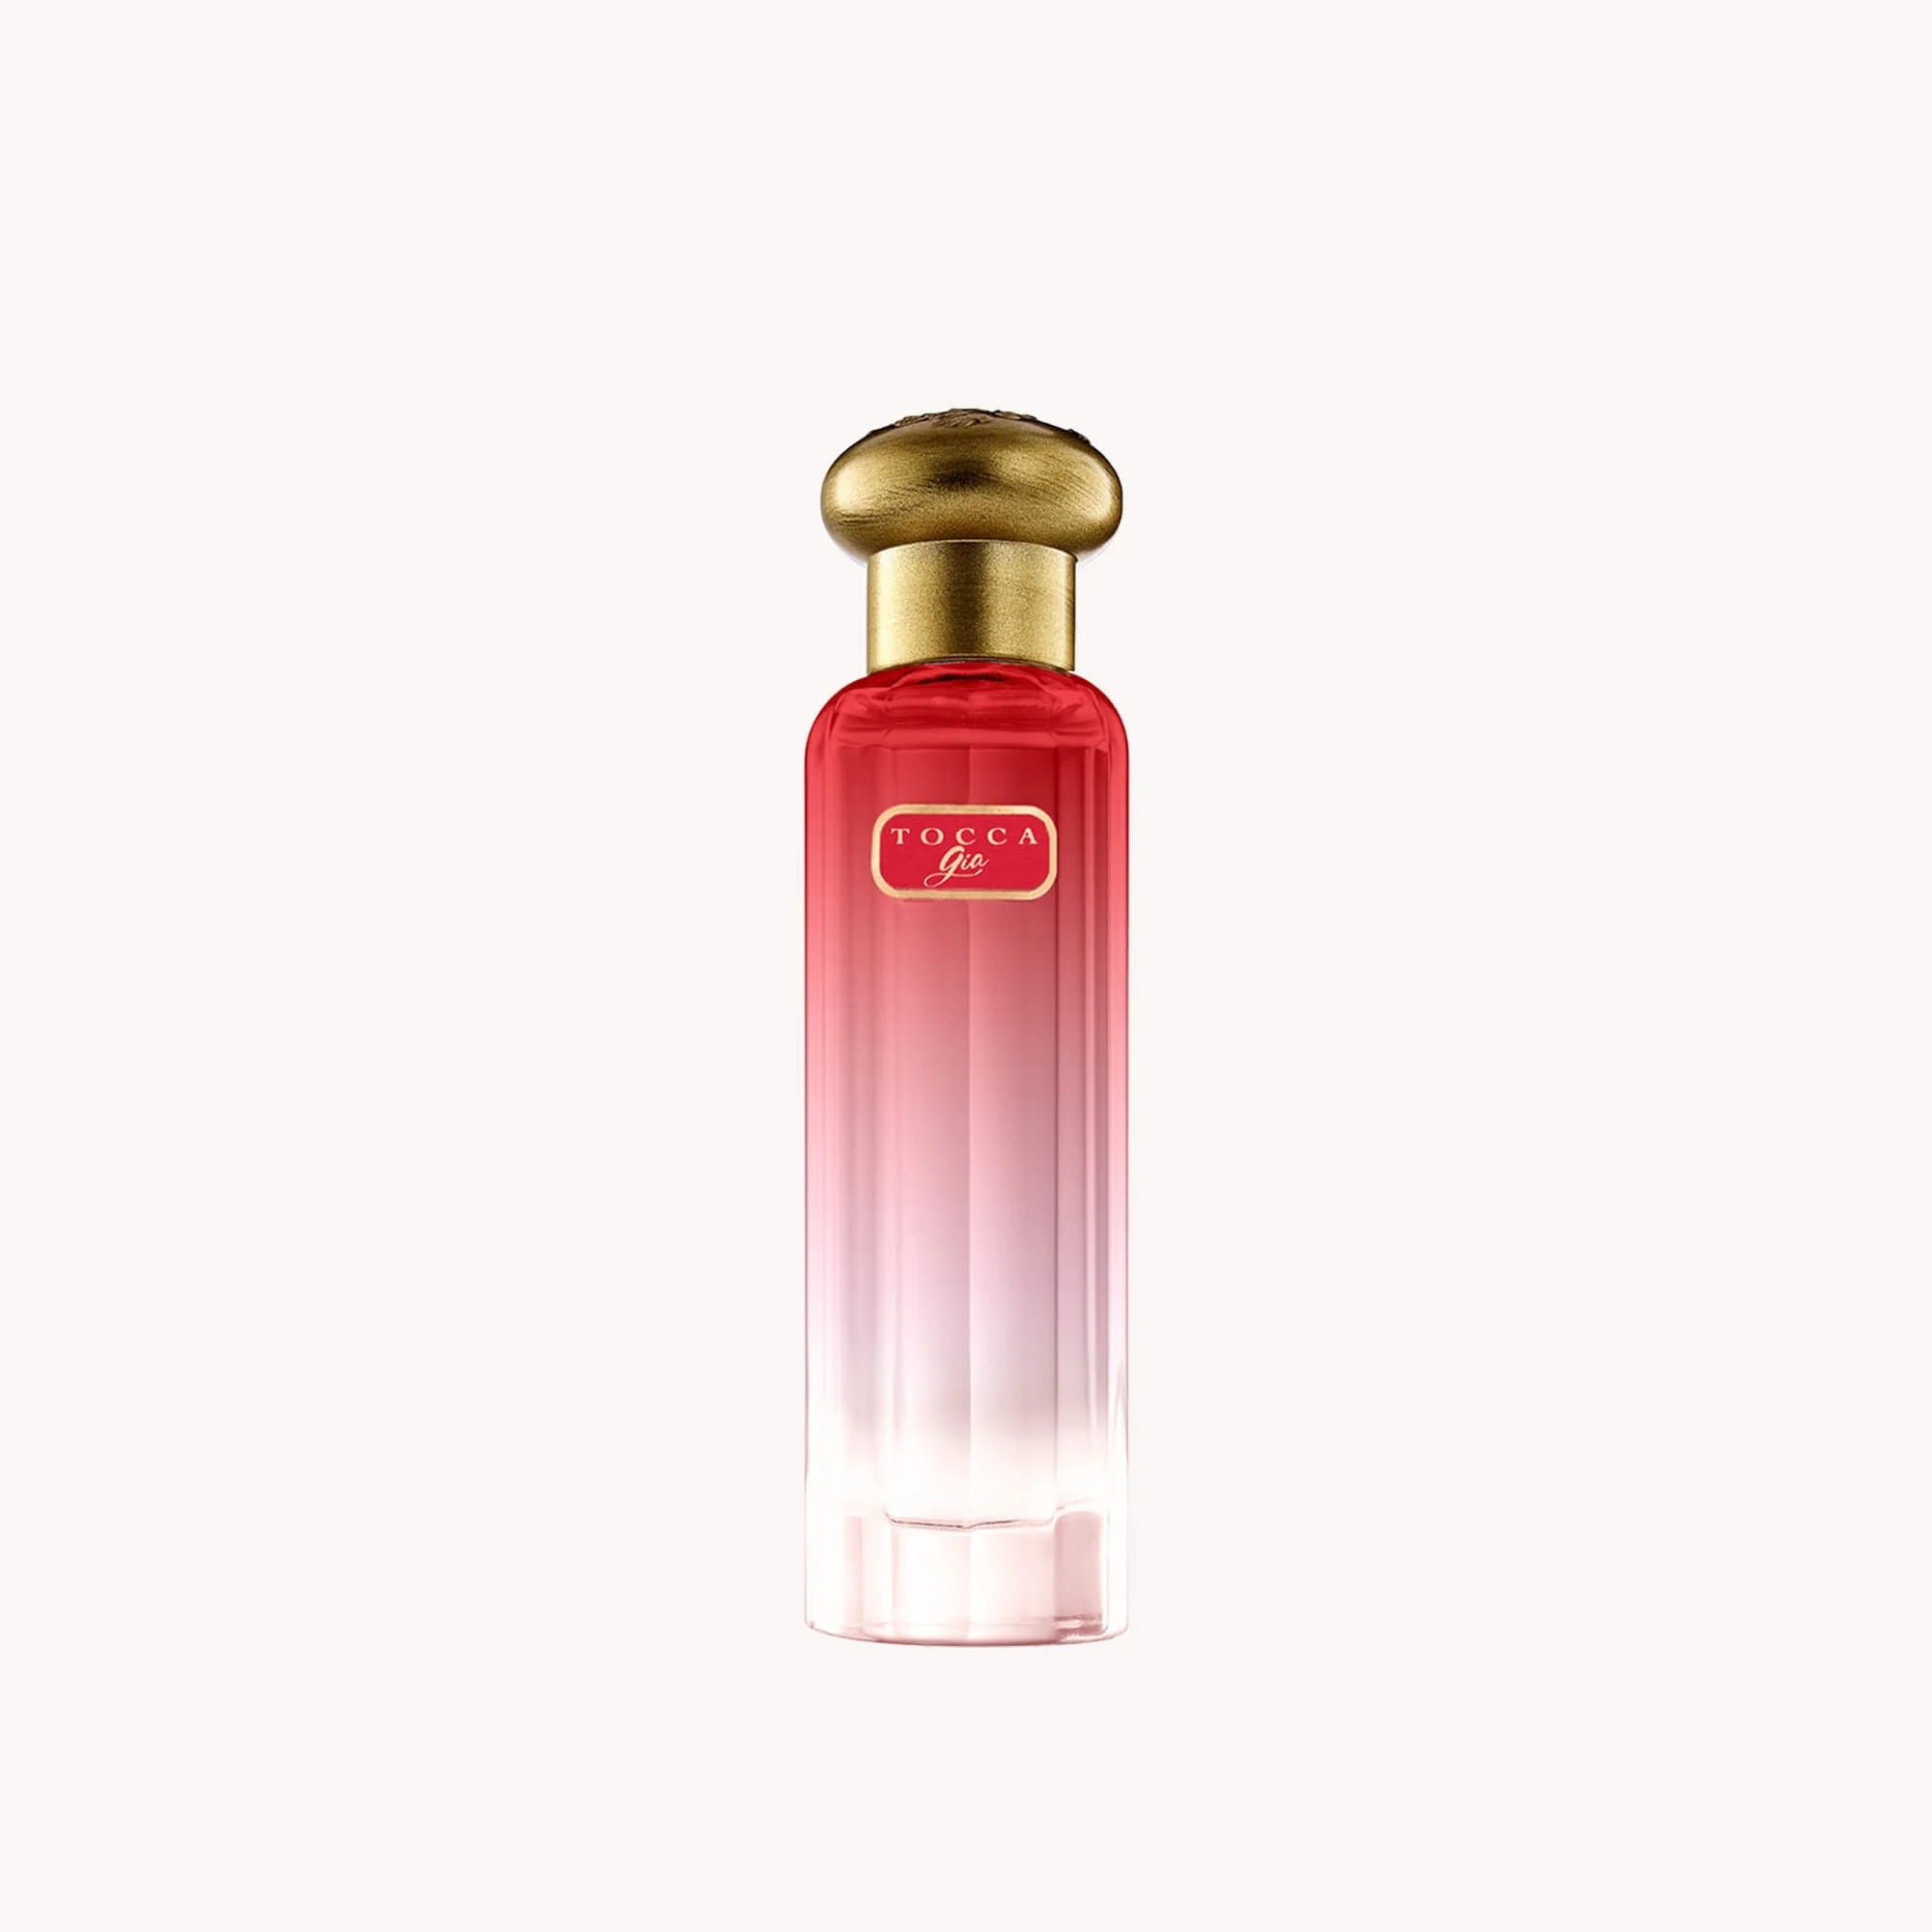 Gia Travel Fragrance Spray